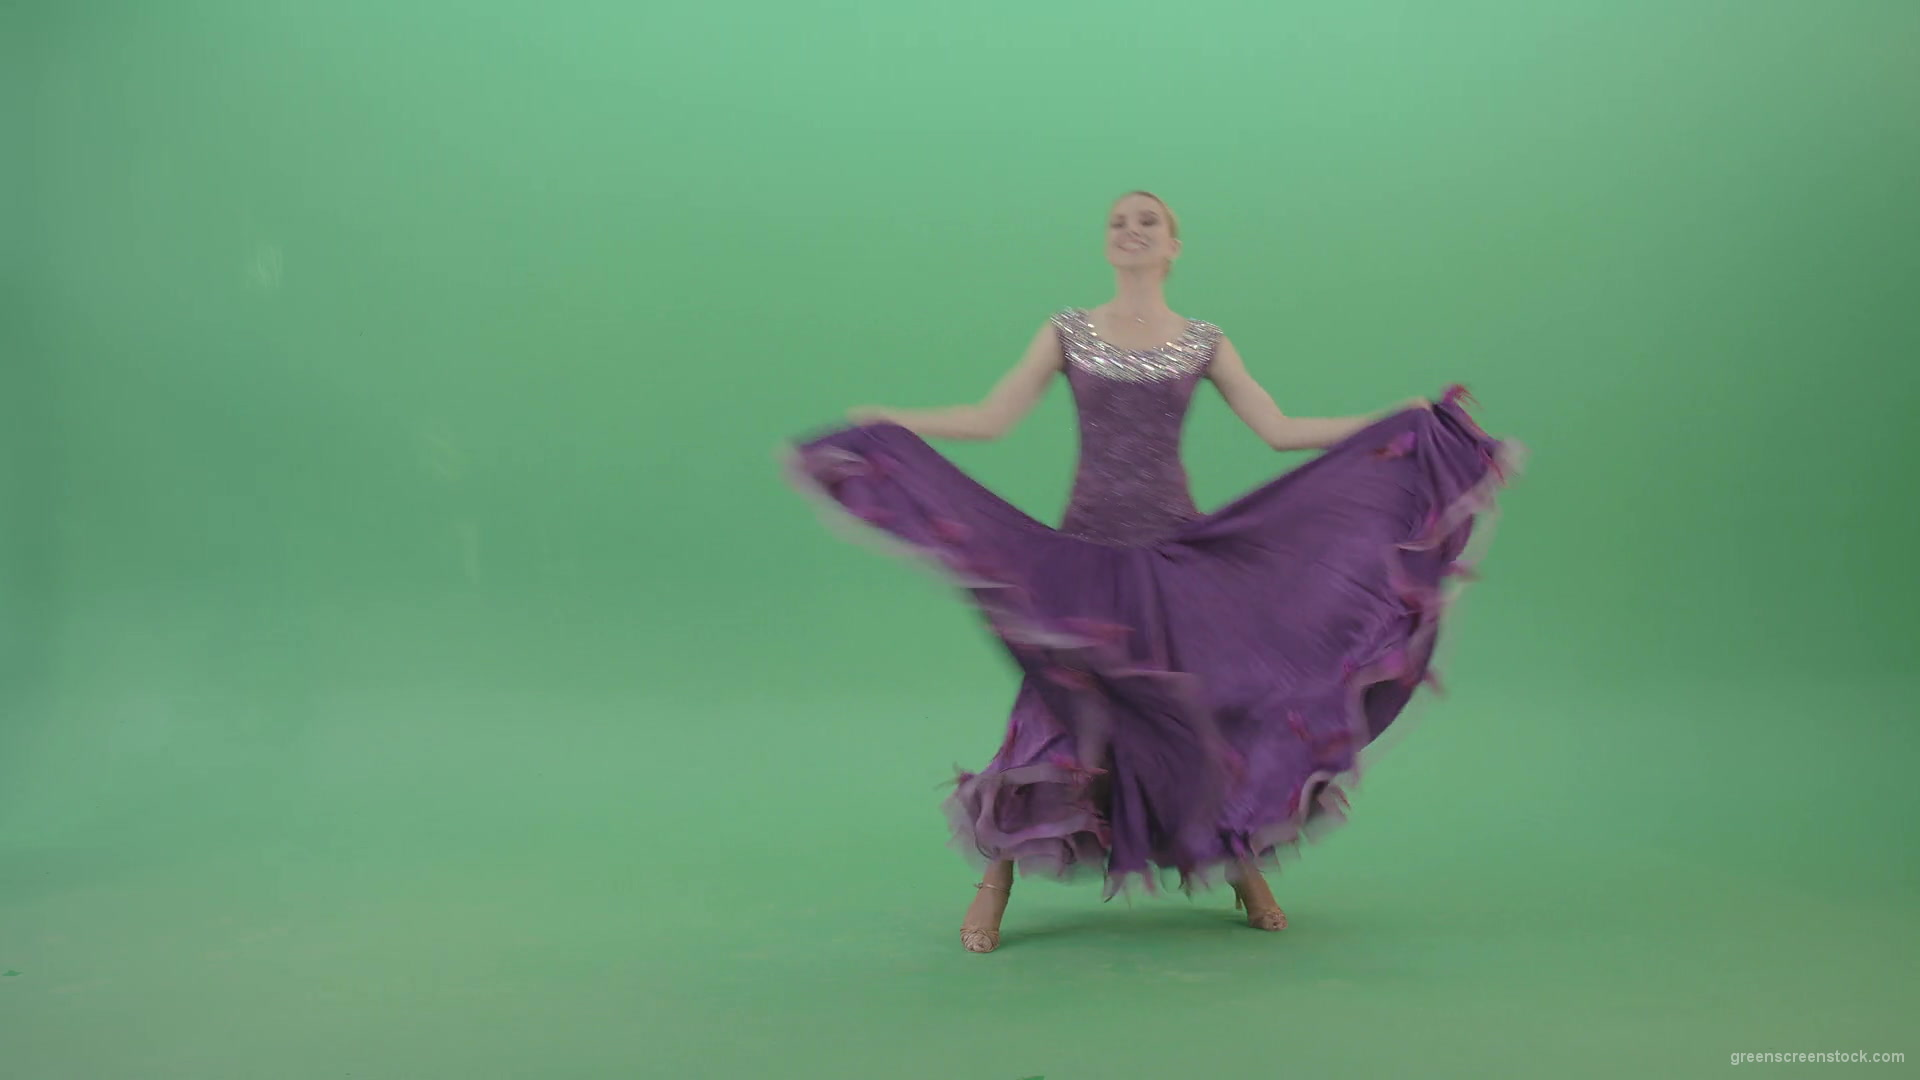 Elite-girl-in-violet-ballroom-dress-makes-reverence-bow-regards-on-green-screen-4K-Video-Footage-1920_005 Green Screen Stock